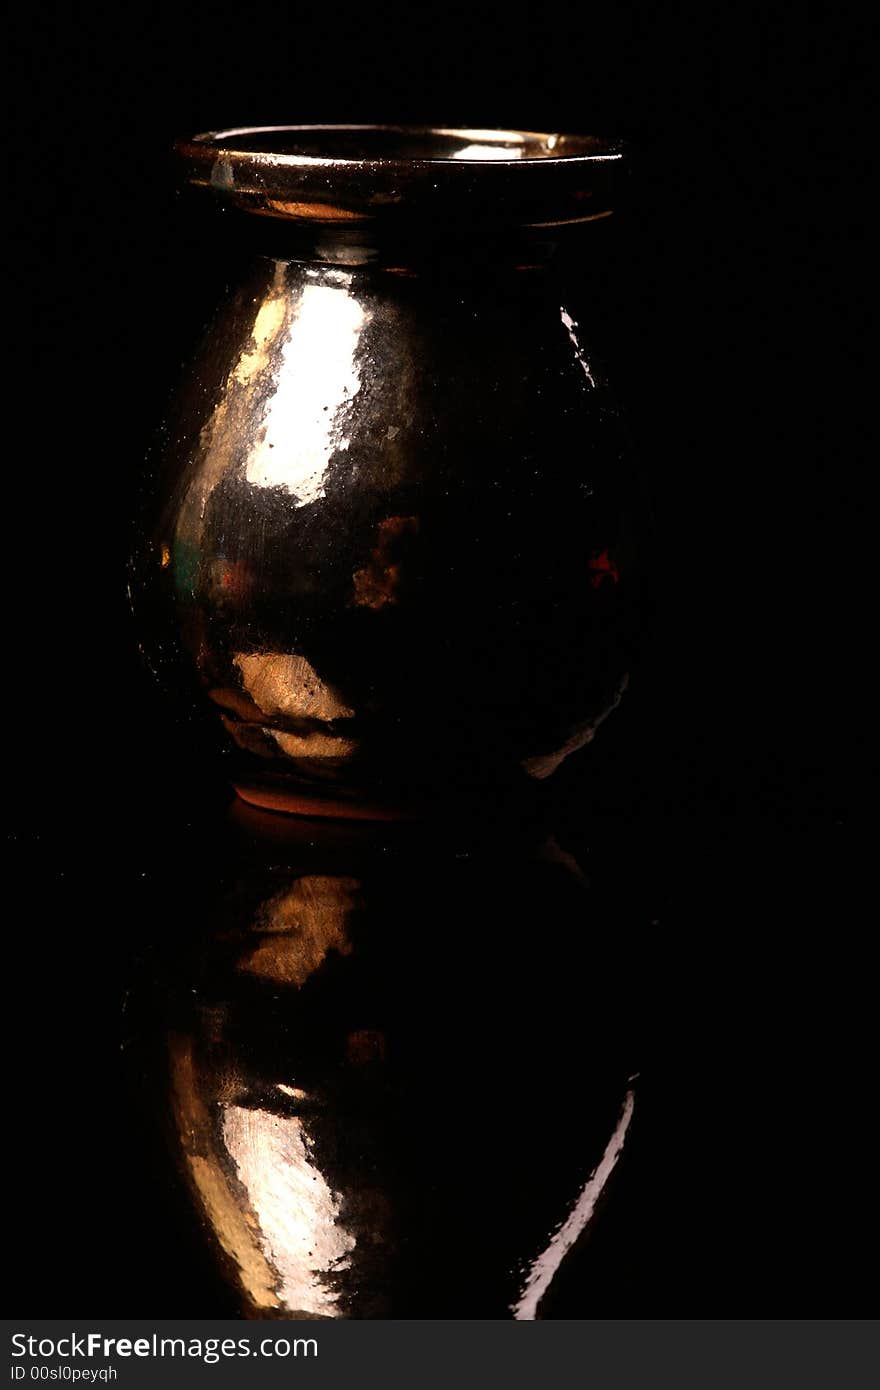 Little metallic vase standing on the black